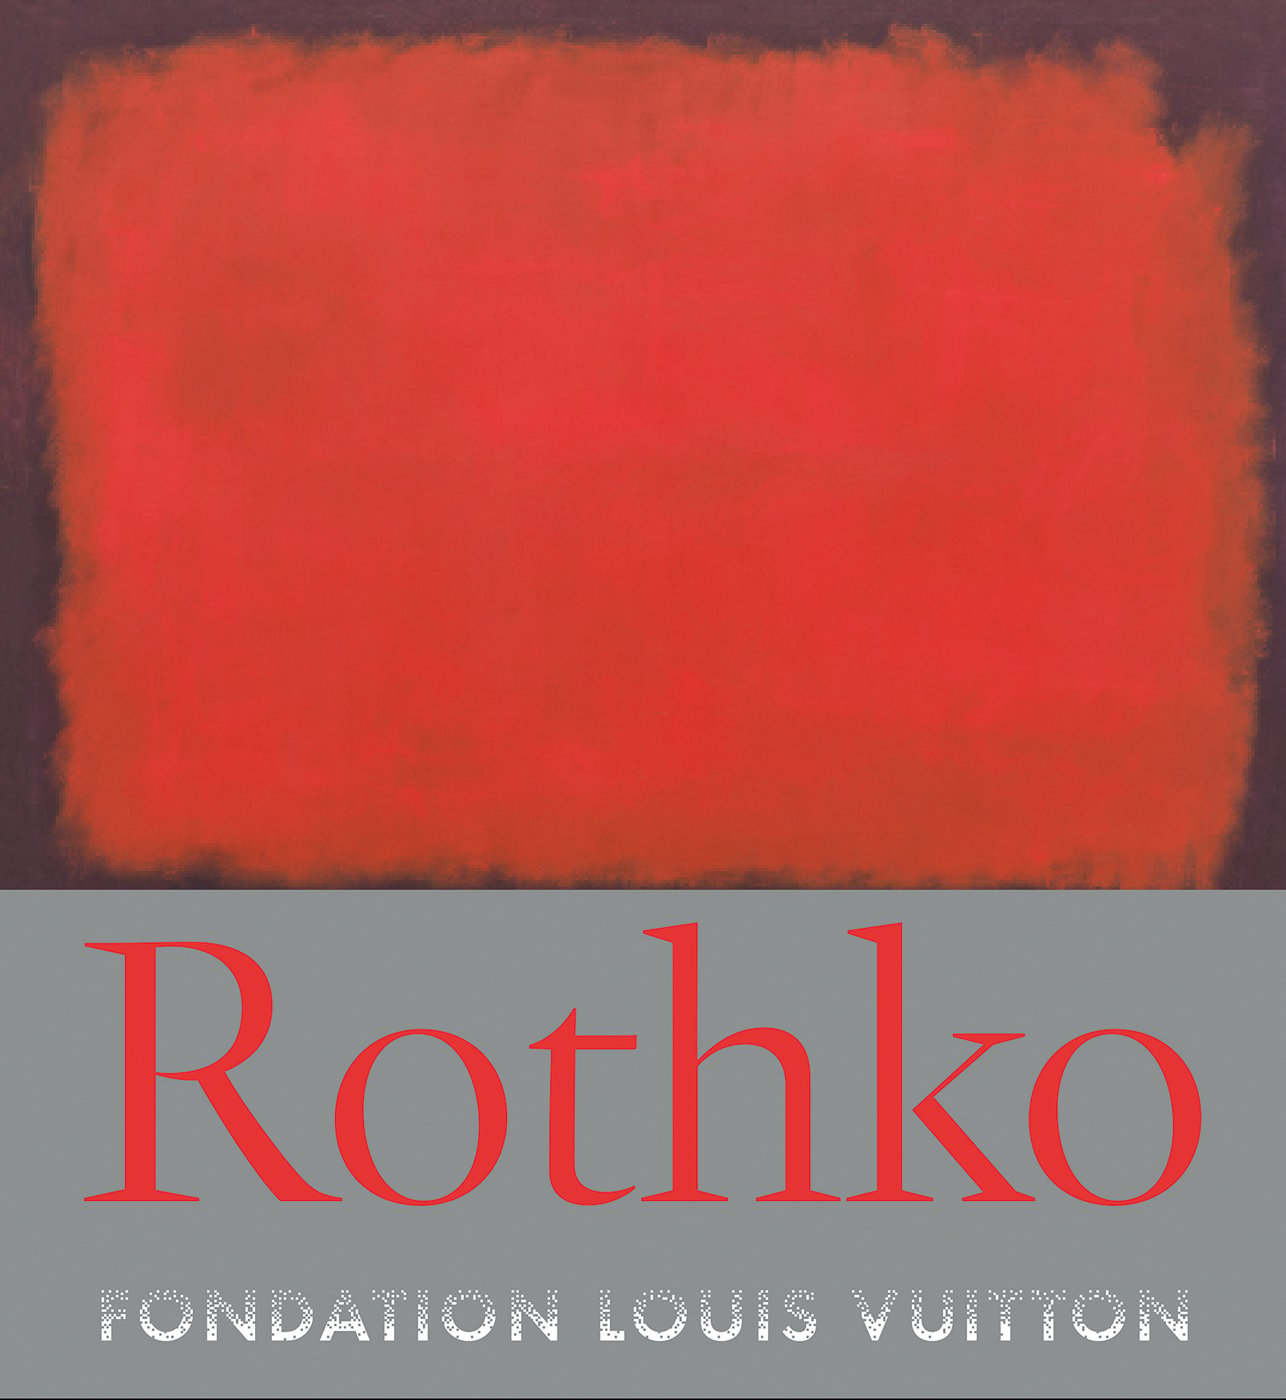 Fondation Louis Vuitton presents a retrospective for Mark Rothko